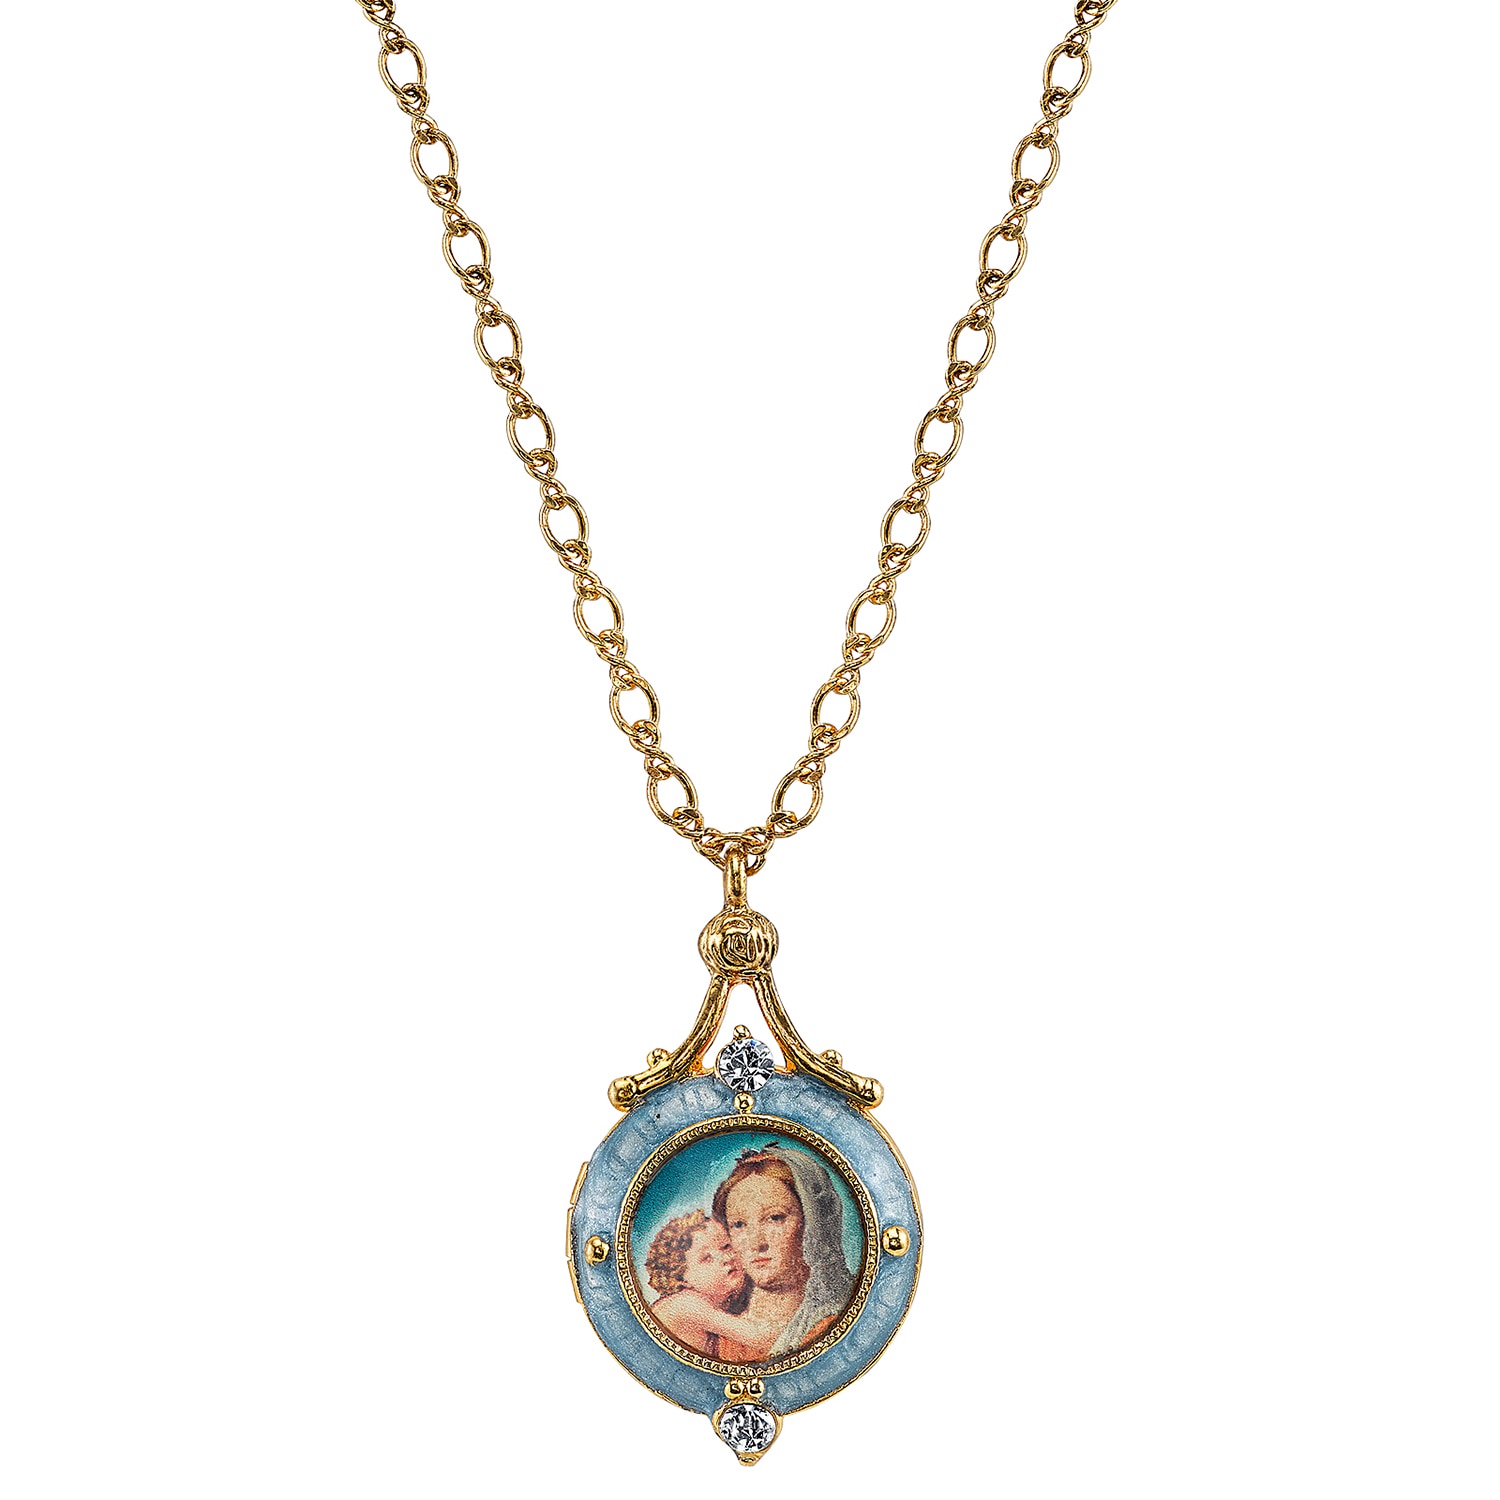 1928 Symbols of Faith gold tone enamel Mary and Child locket necklace 18 inch chain